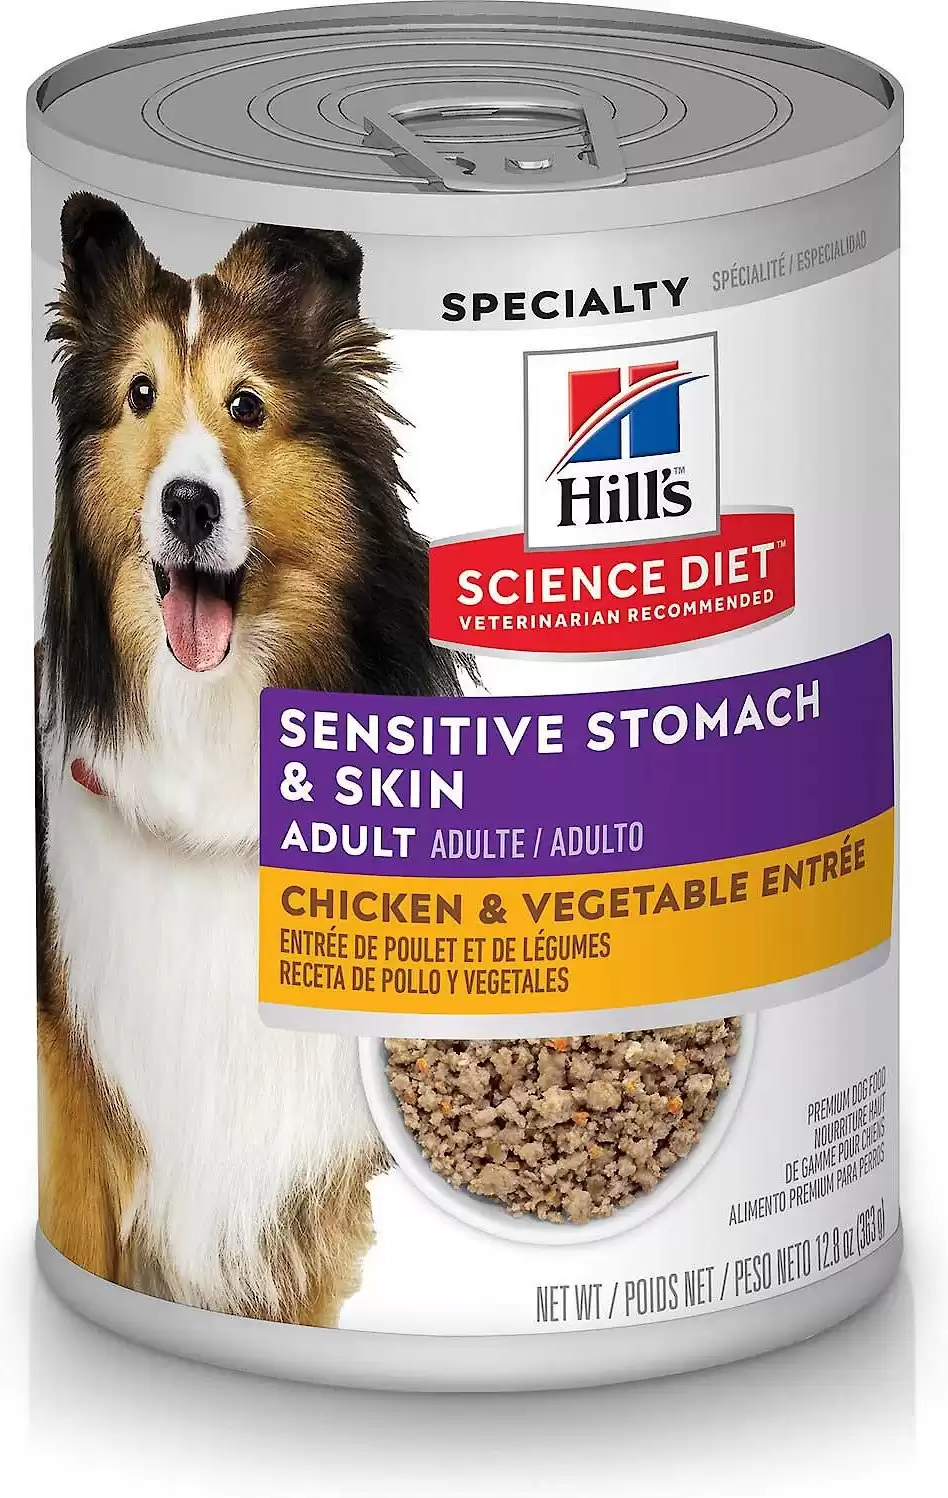 Hill’s Science Diet Adult Sensitive Stomach & Skin Chicken & Vegetable Entrée Canned Dog Food